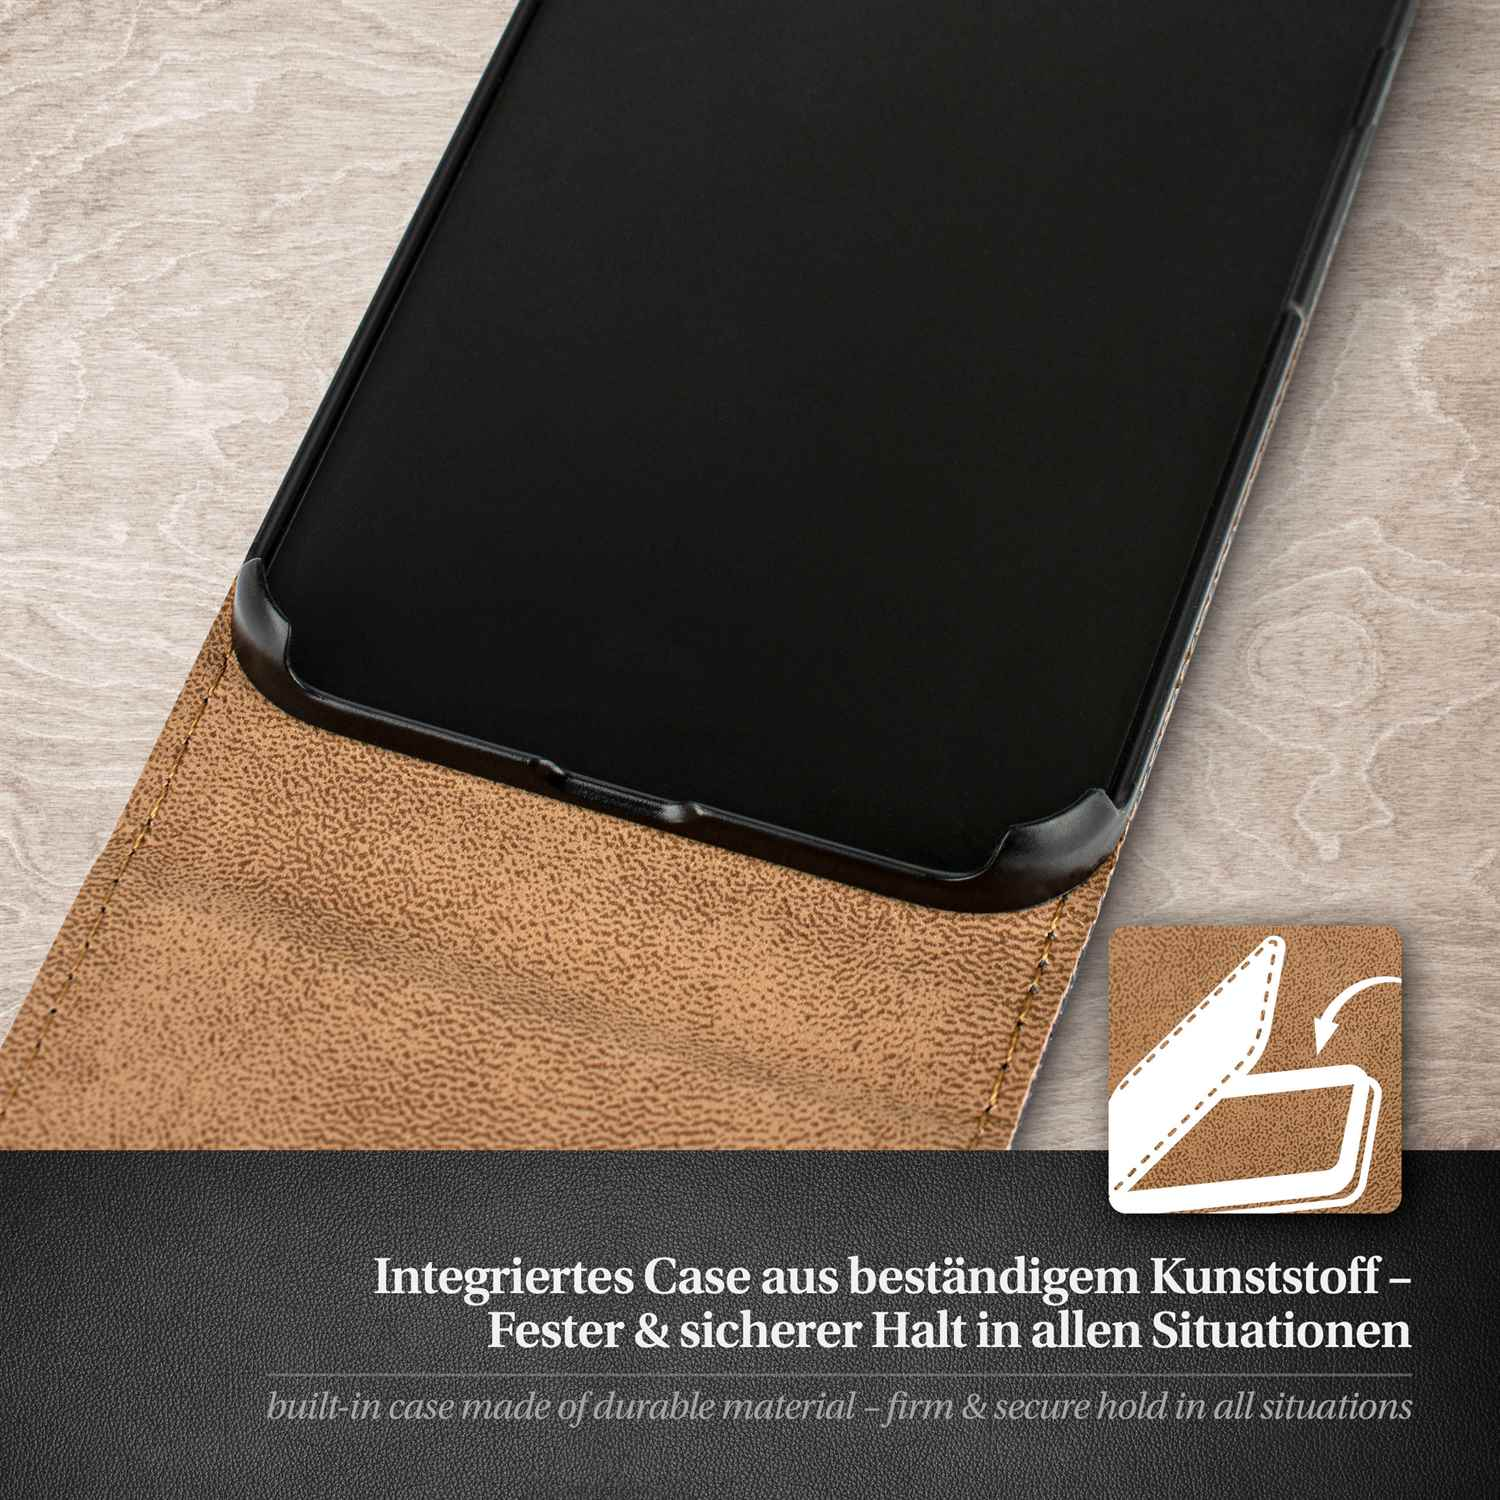 Cover, Galaxy Case, MOEX Plus, Berry-Fuchsia S2 Flip Flip Samsung,